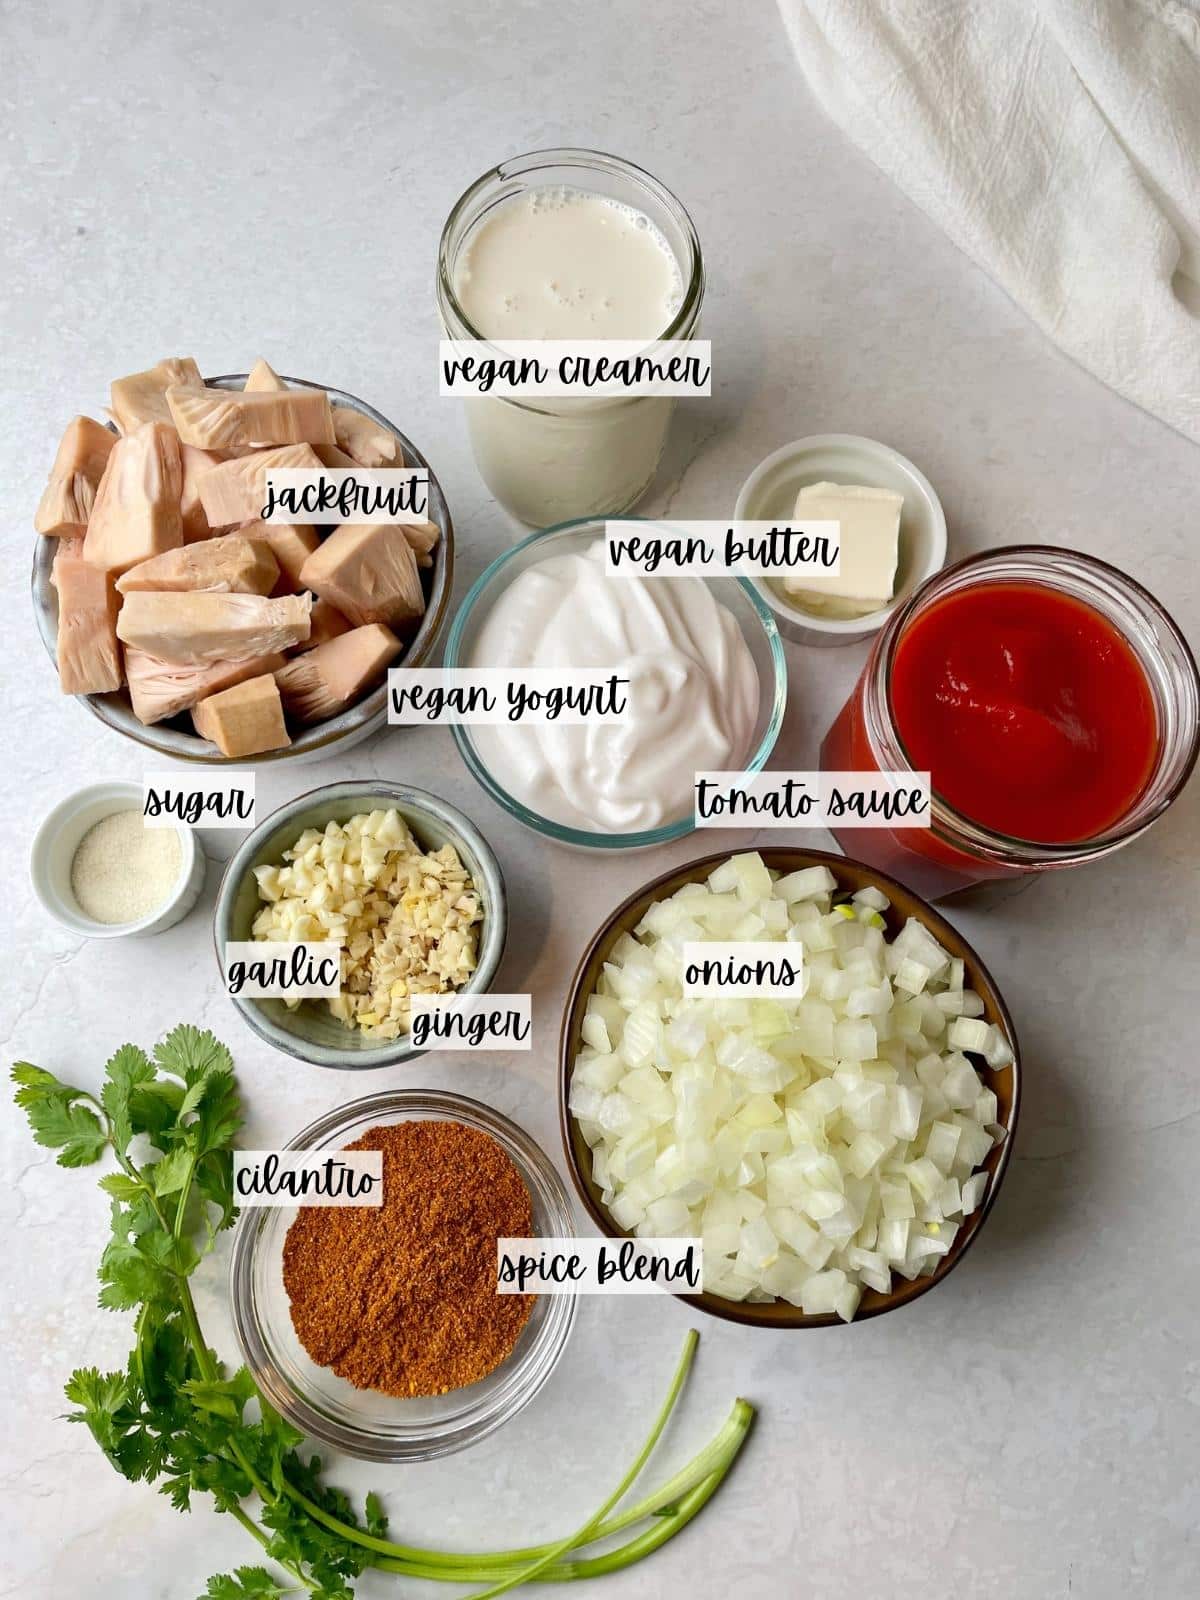 Labeled ingredients for tikka masala.